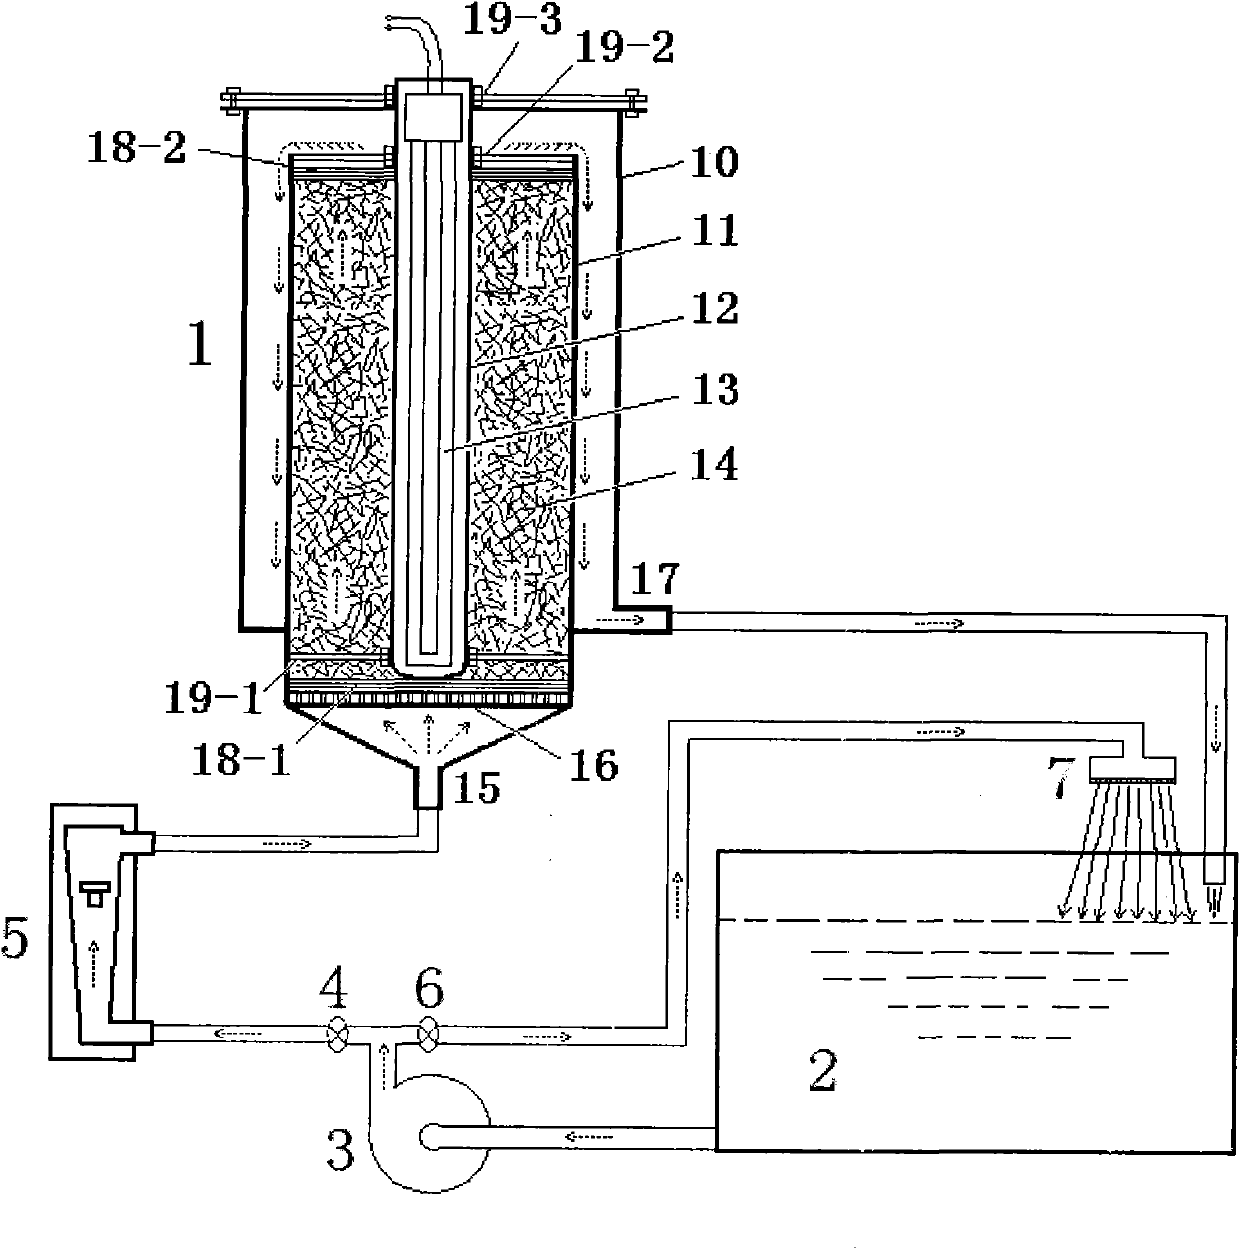 Circulating water treatment device and process using nanocrystalline titanium dioxide fiber photocatalysis reactor